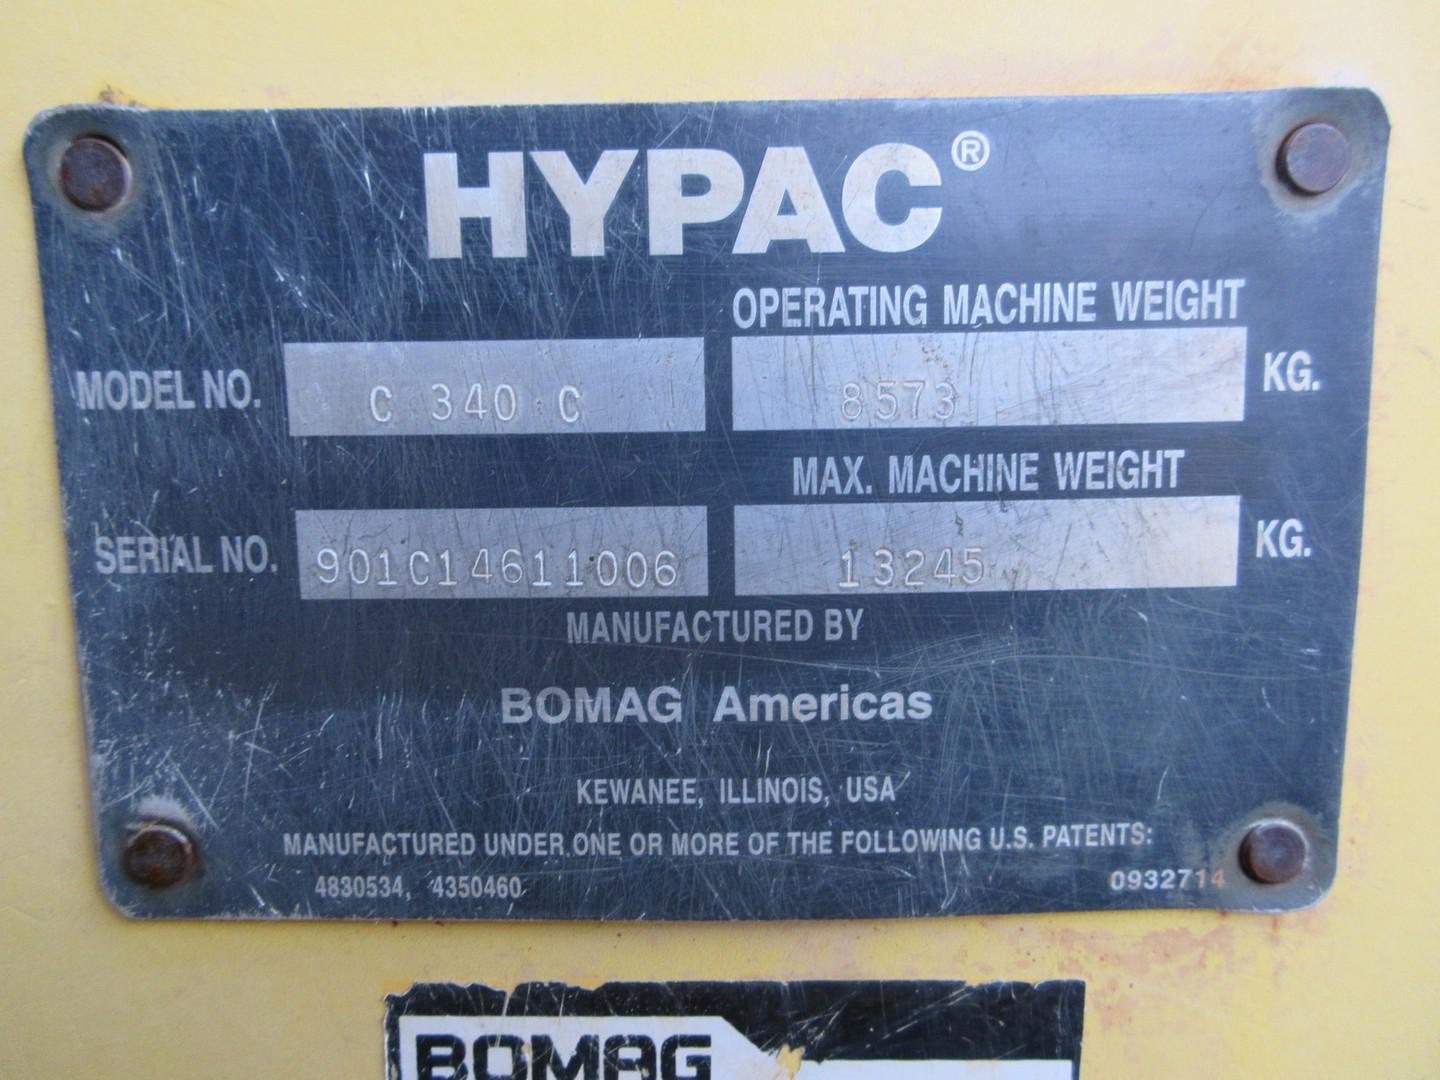 2005 Hypac C340C Double Drum Roller